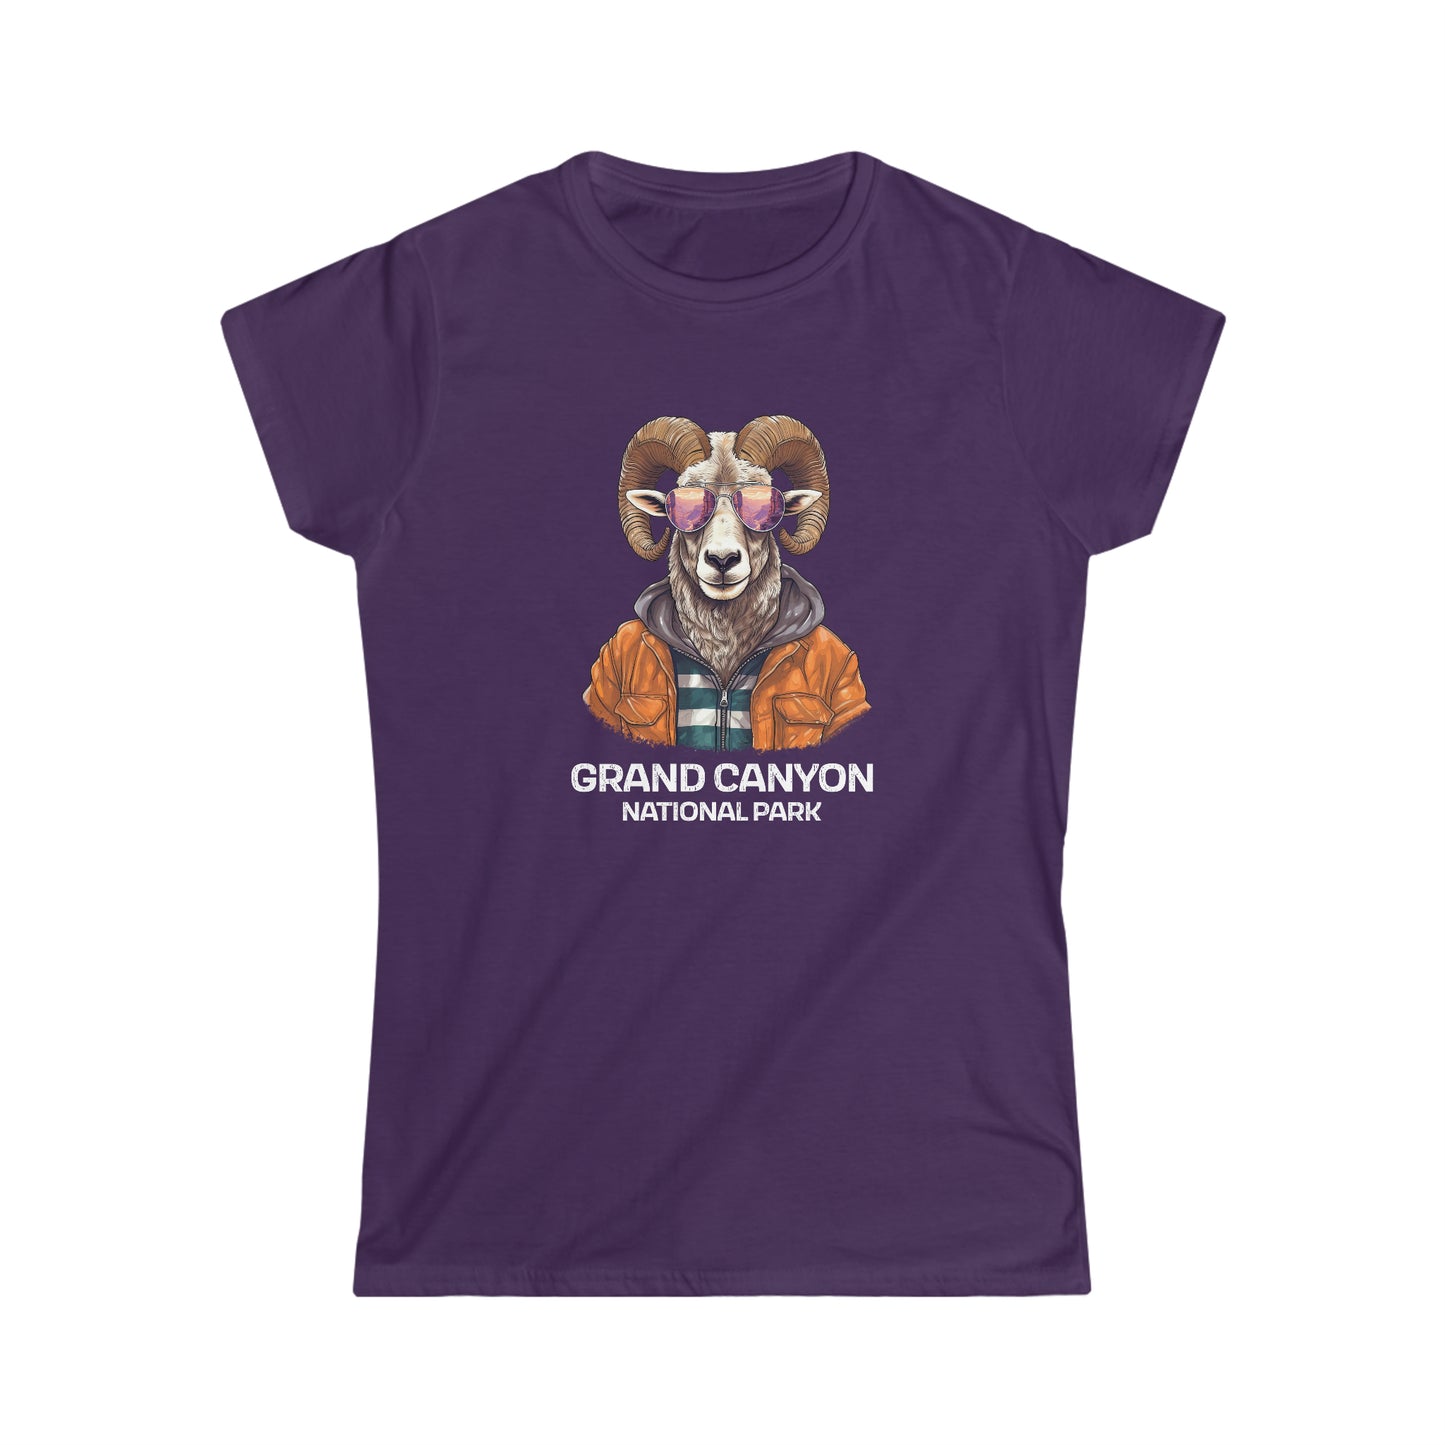 Grand Canyon National Park Women's T-Shirt - Cool Bighorn